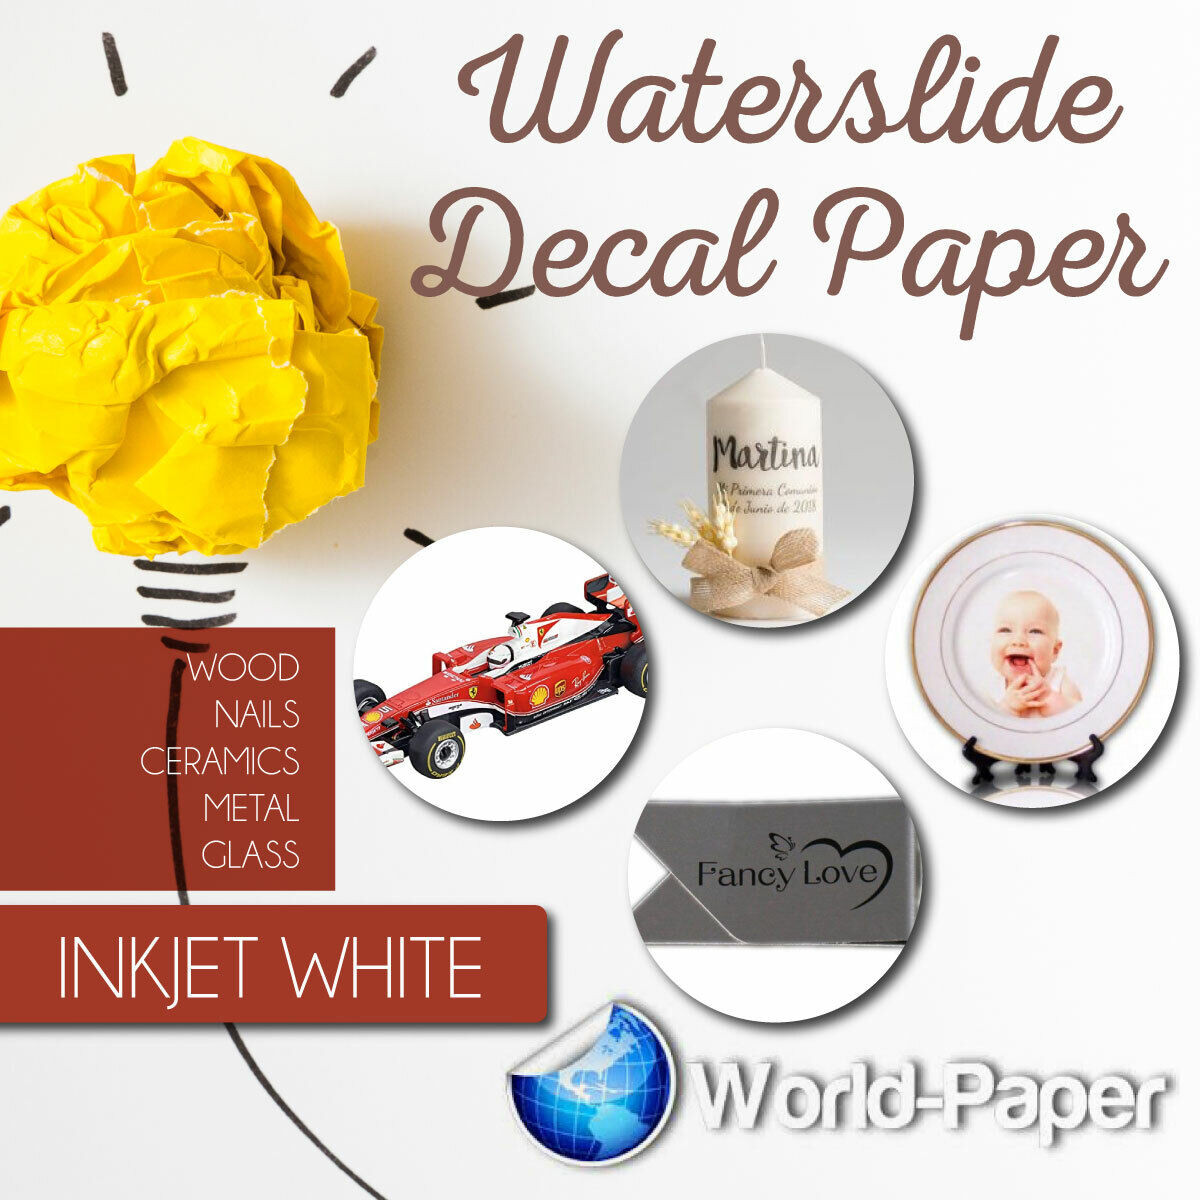 10 sheets WHITE INKJET Waterslide decal paper 8.5x11 WORLD PAPER ORIGINAL USA #1